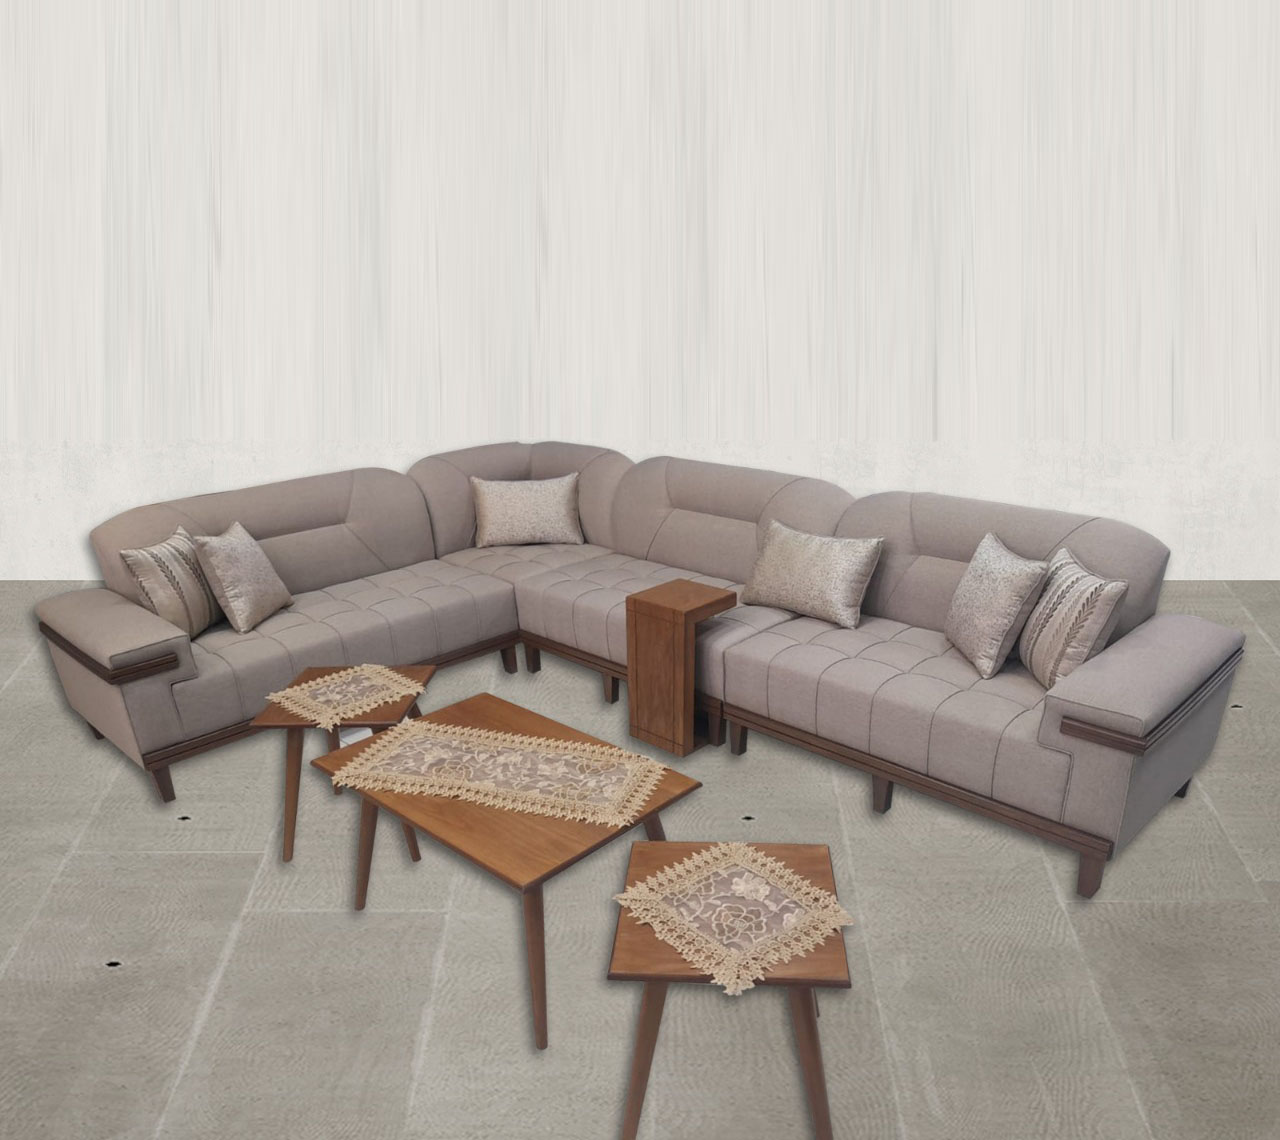 RETAG Sofa Set Corner Cloth Material Size 3.5x2.5m With Tea Tables 